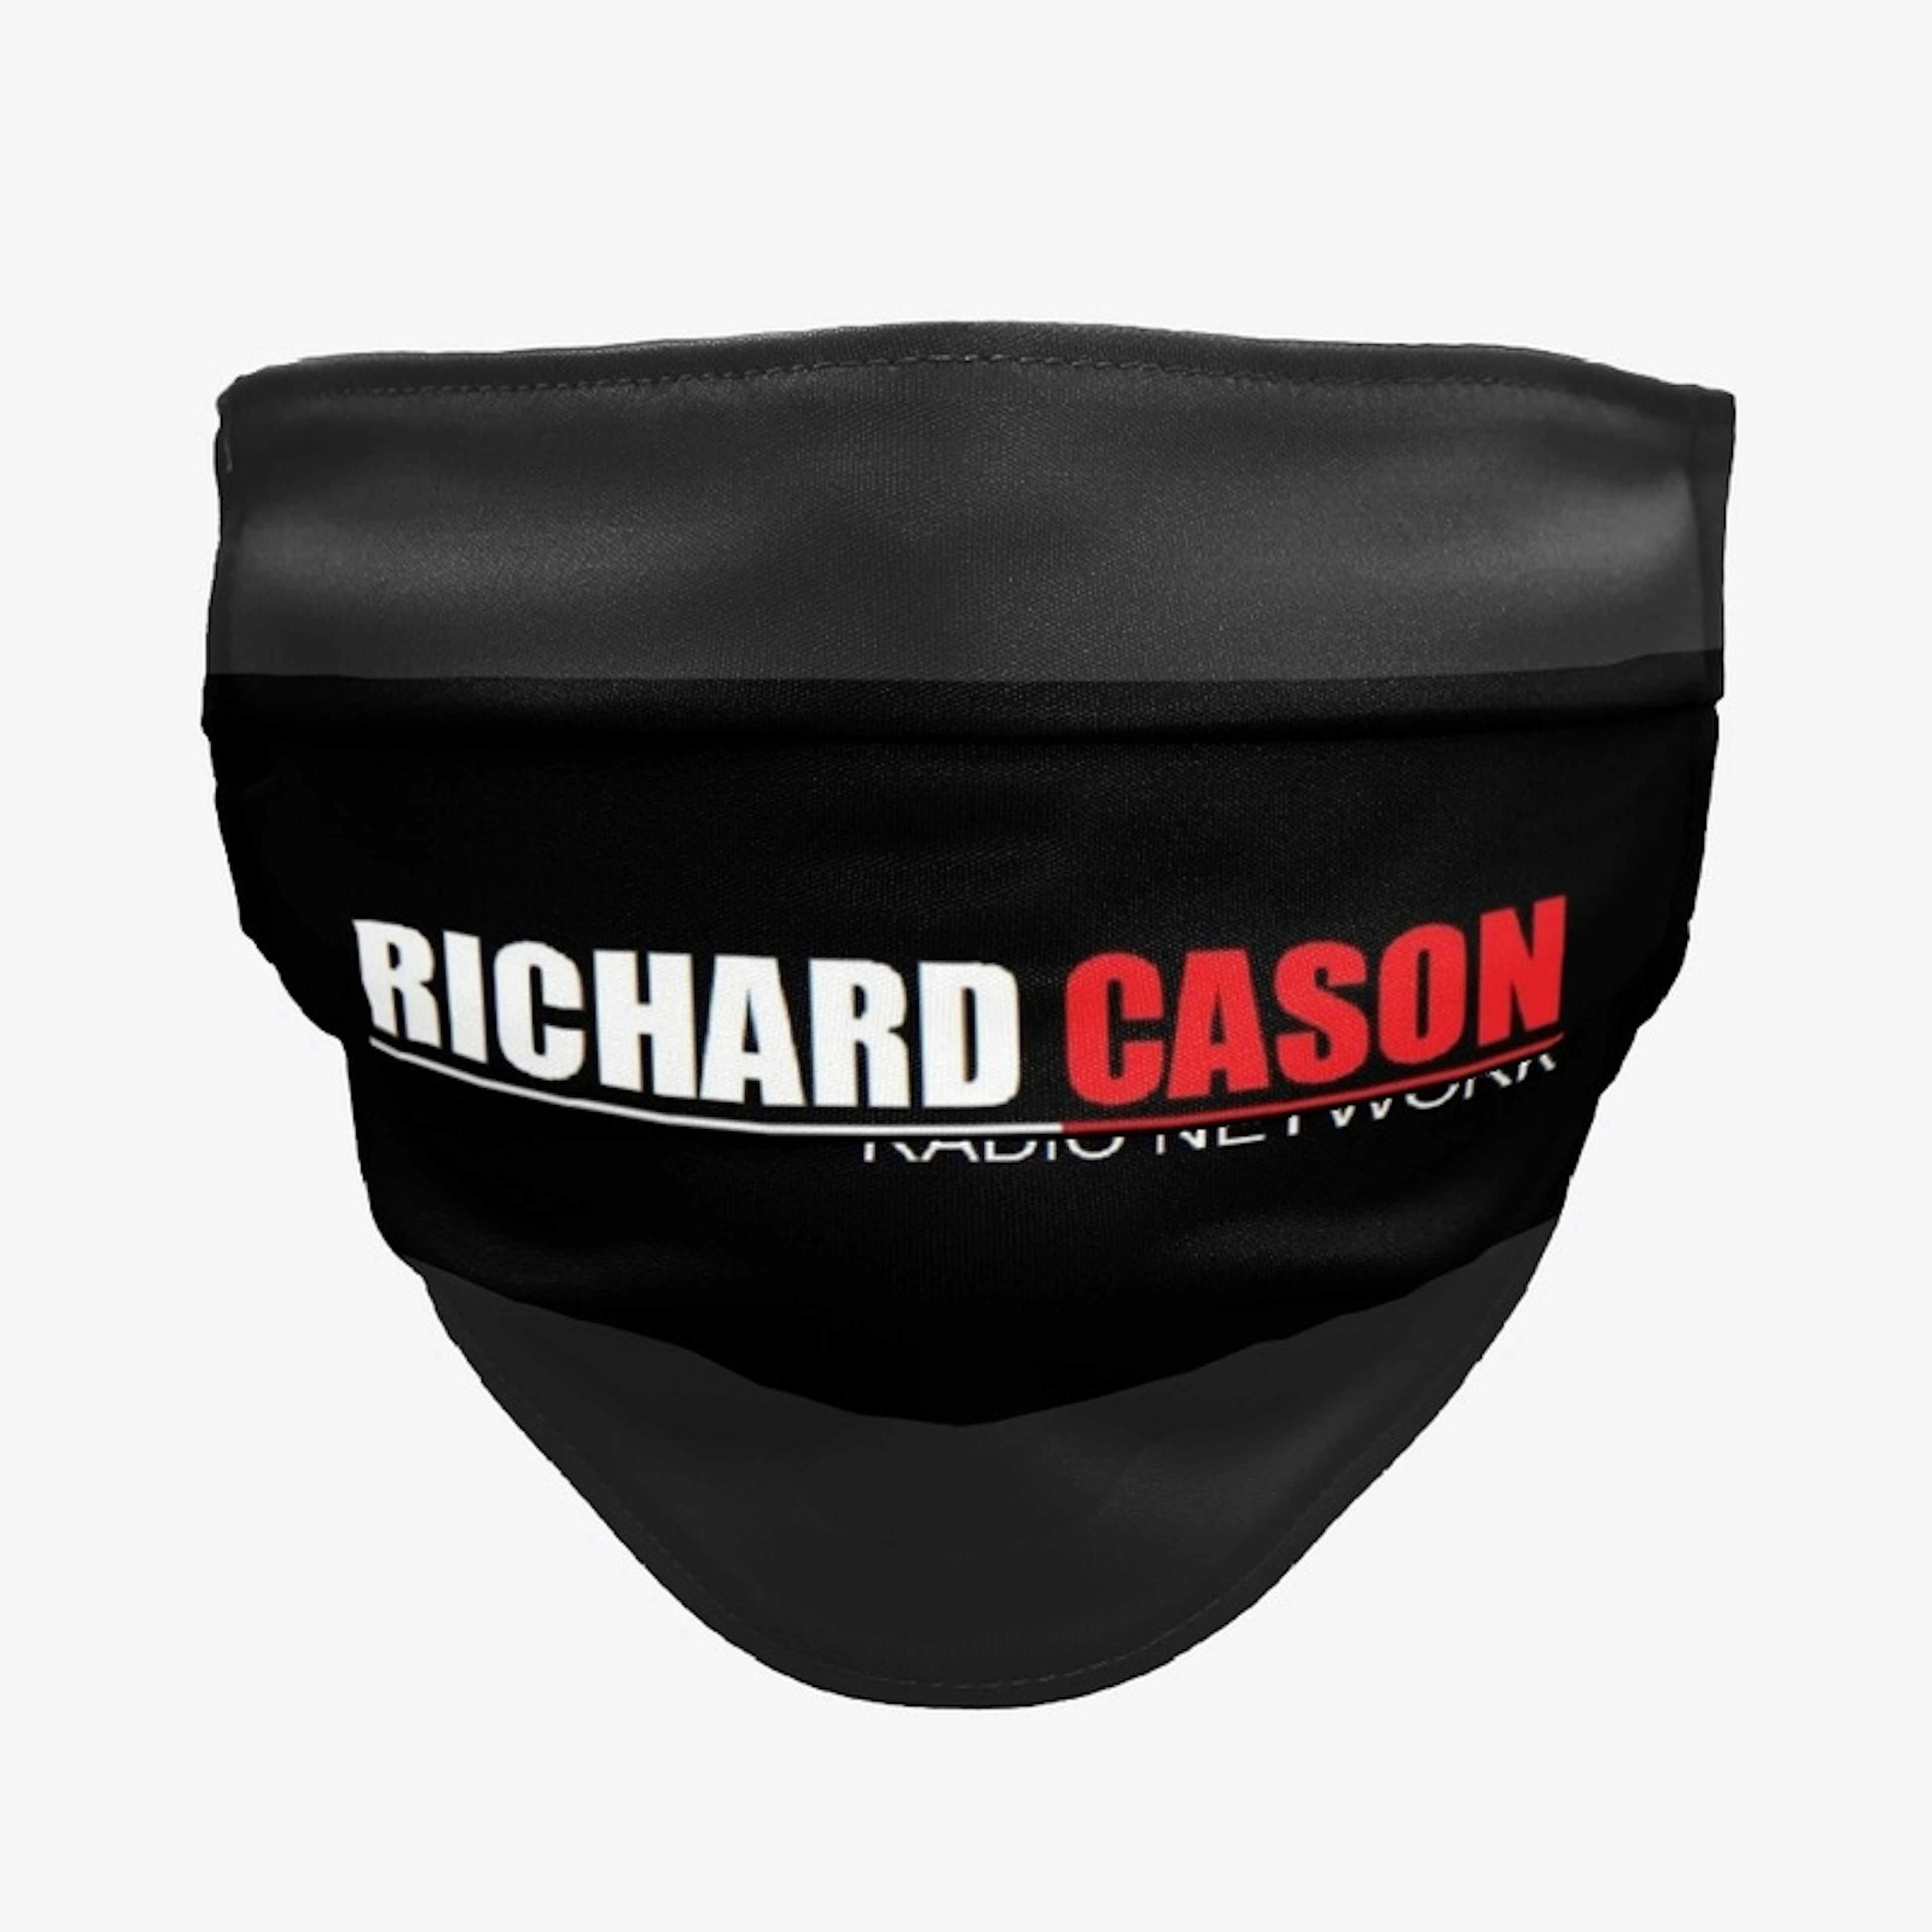 Richard Cason Radio Network Face Mask